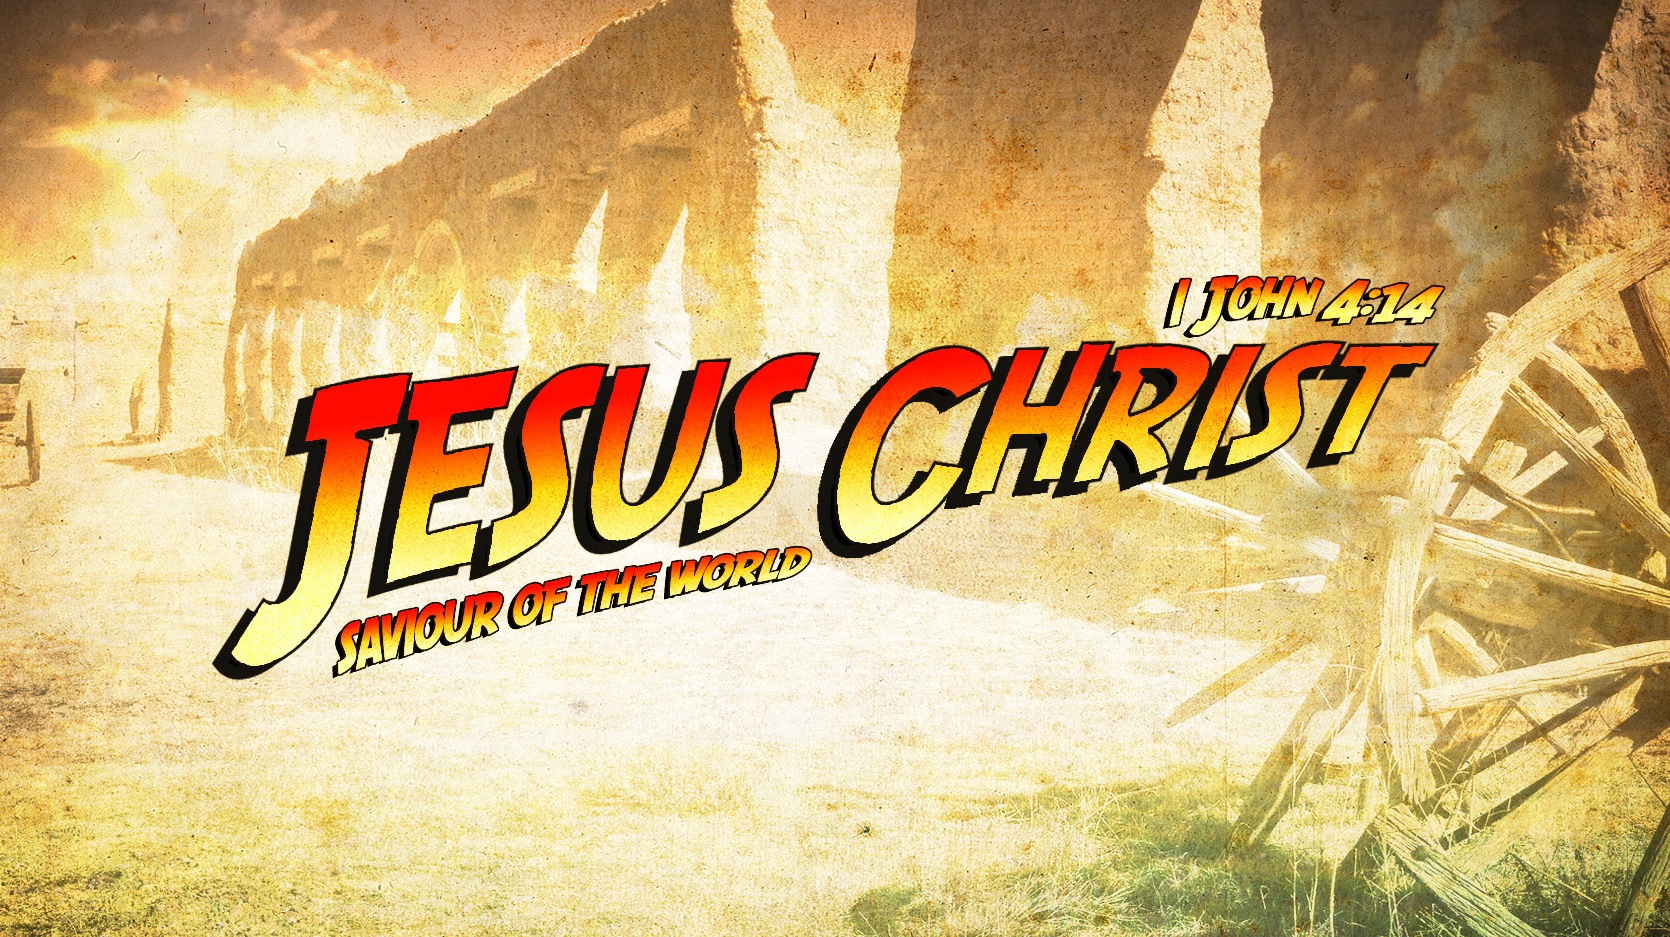 jesus-religioso-christ-digital-art-1473905